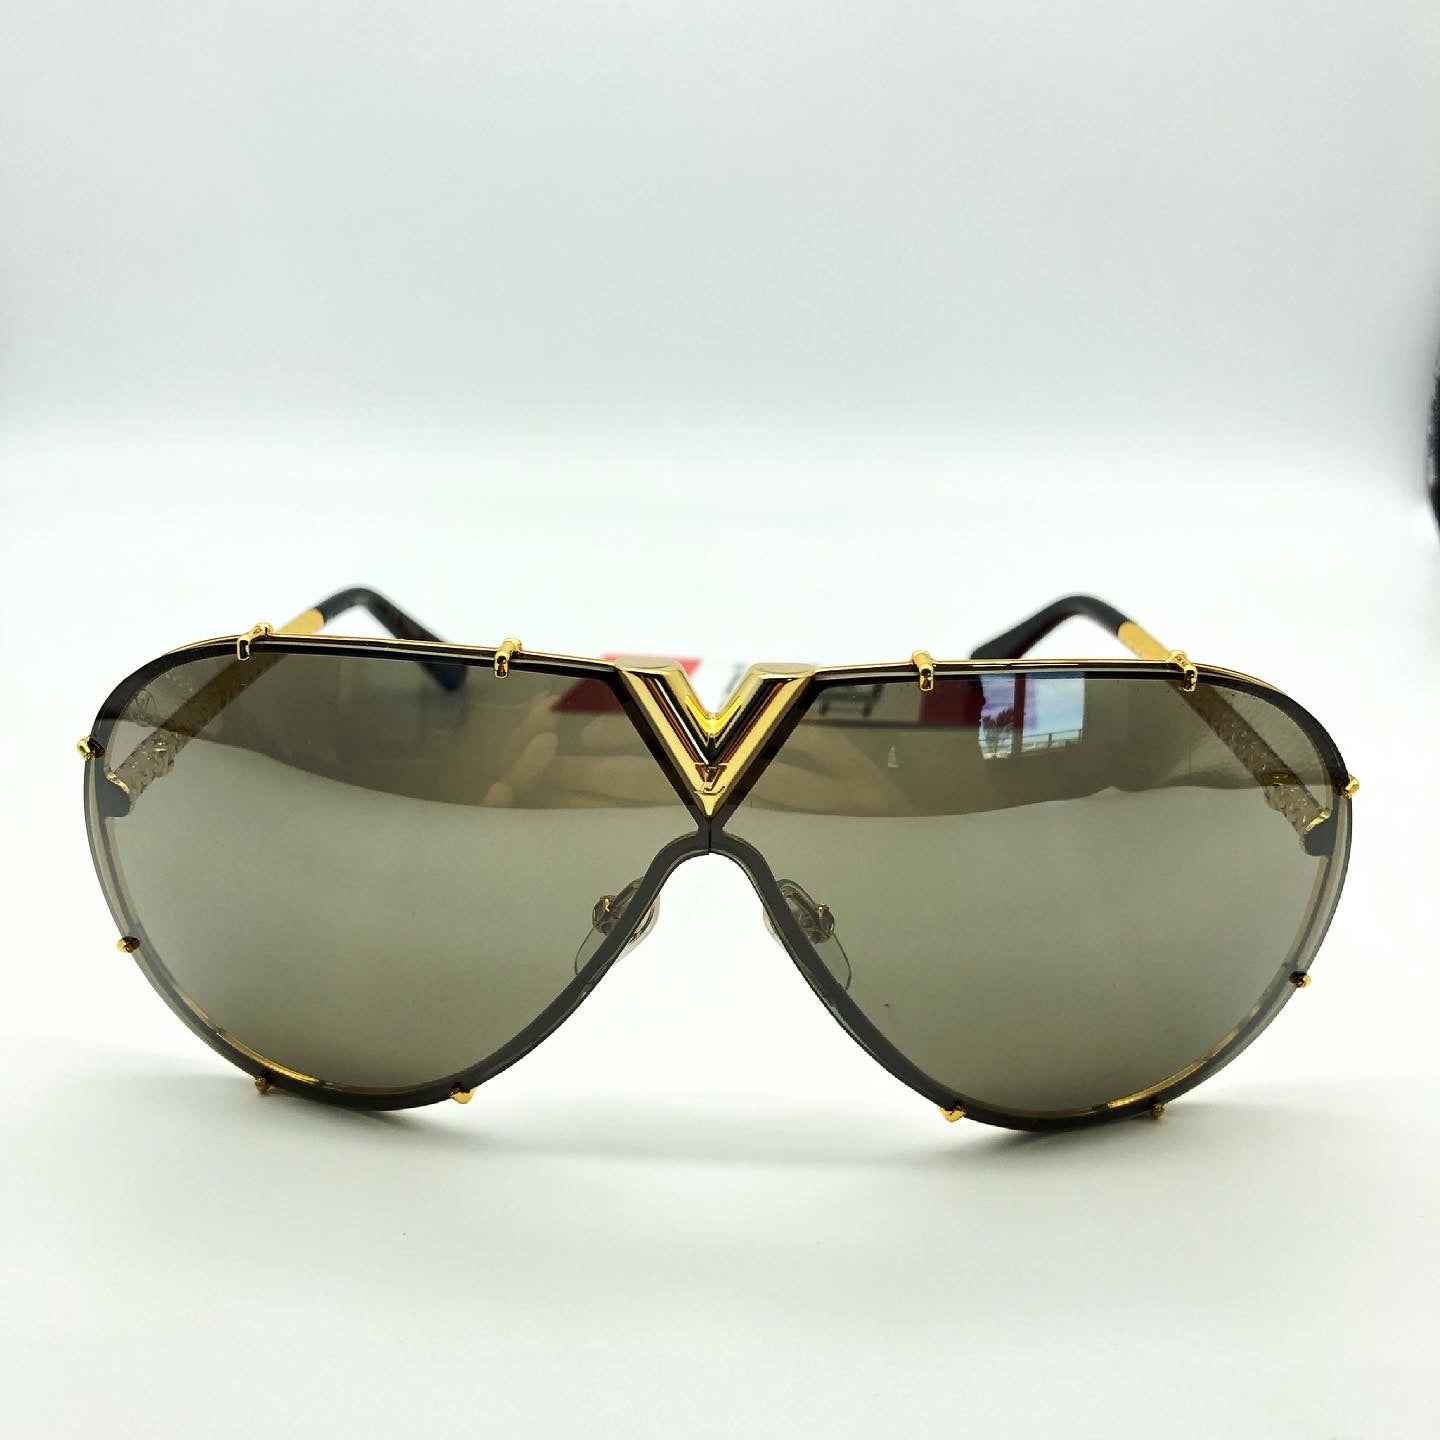 Louis Vuitton Lv Drive Sunglasses In Silver